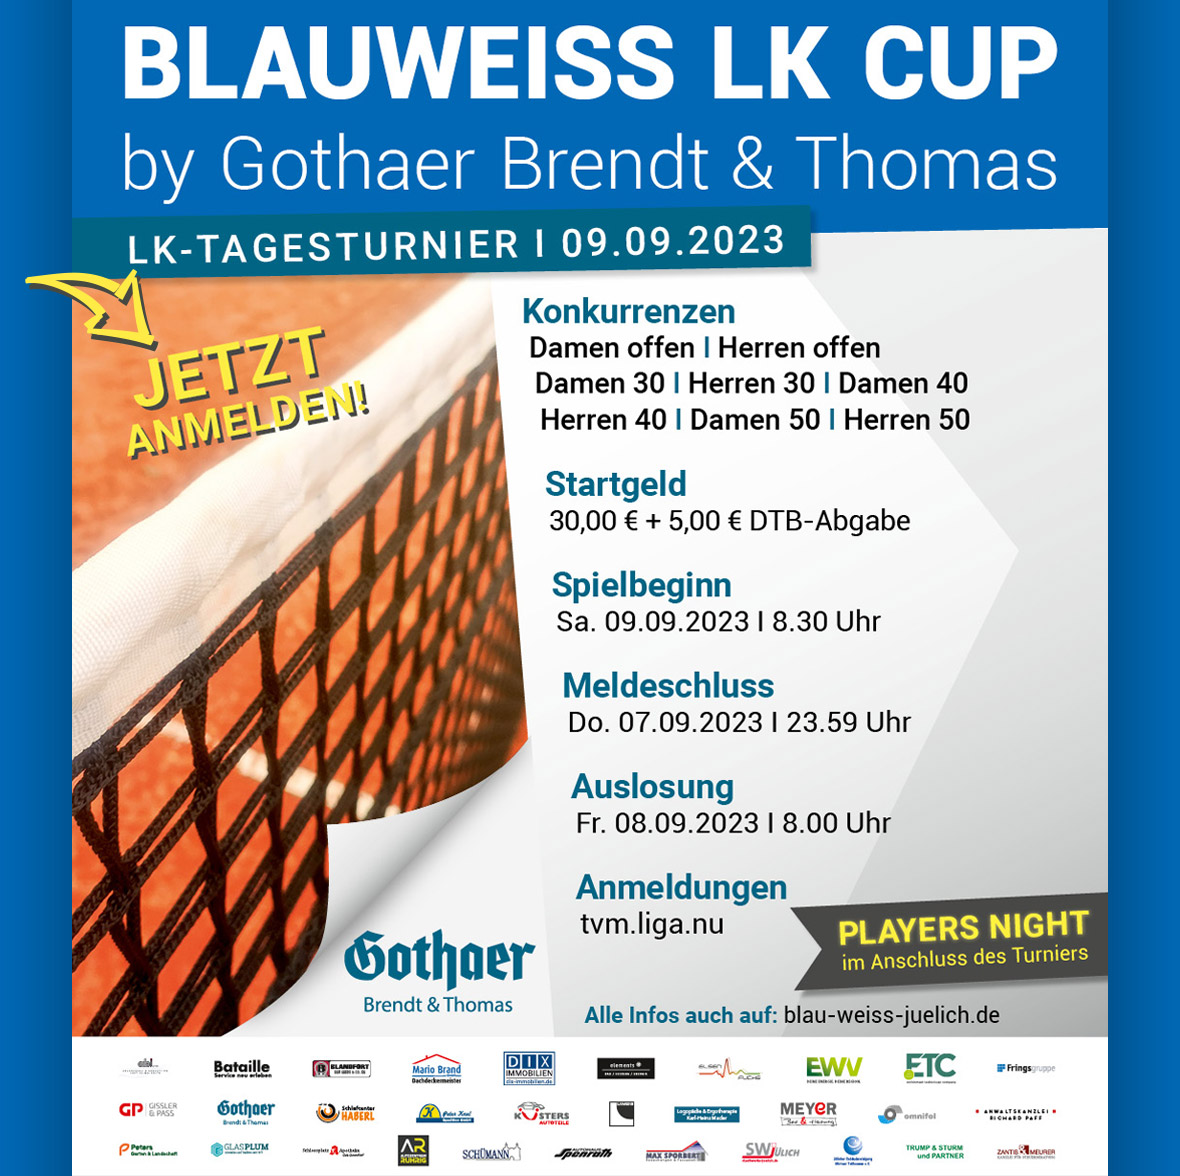 BW LK Cup by Gothaer Brendt & Thomas